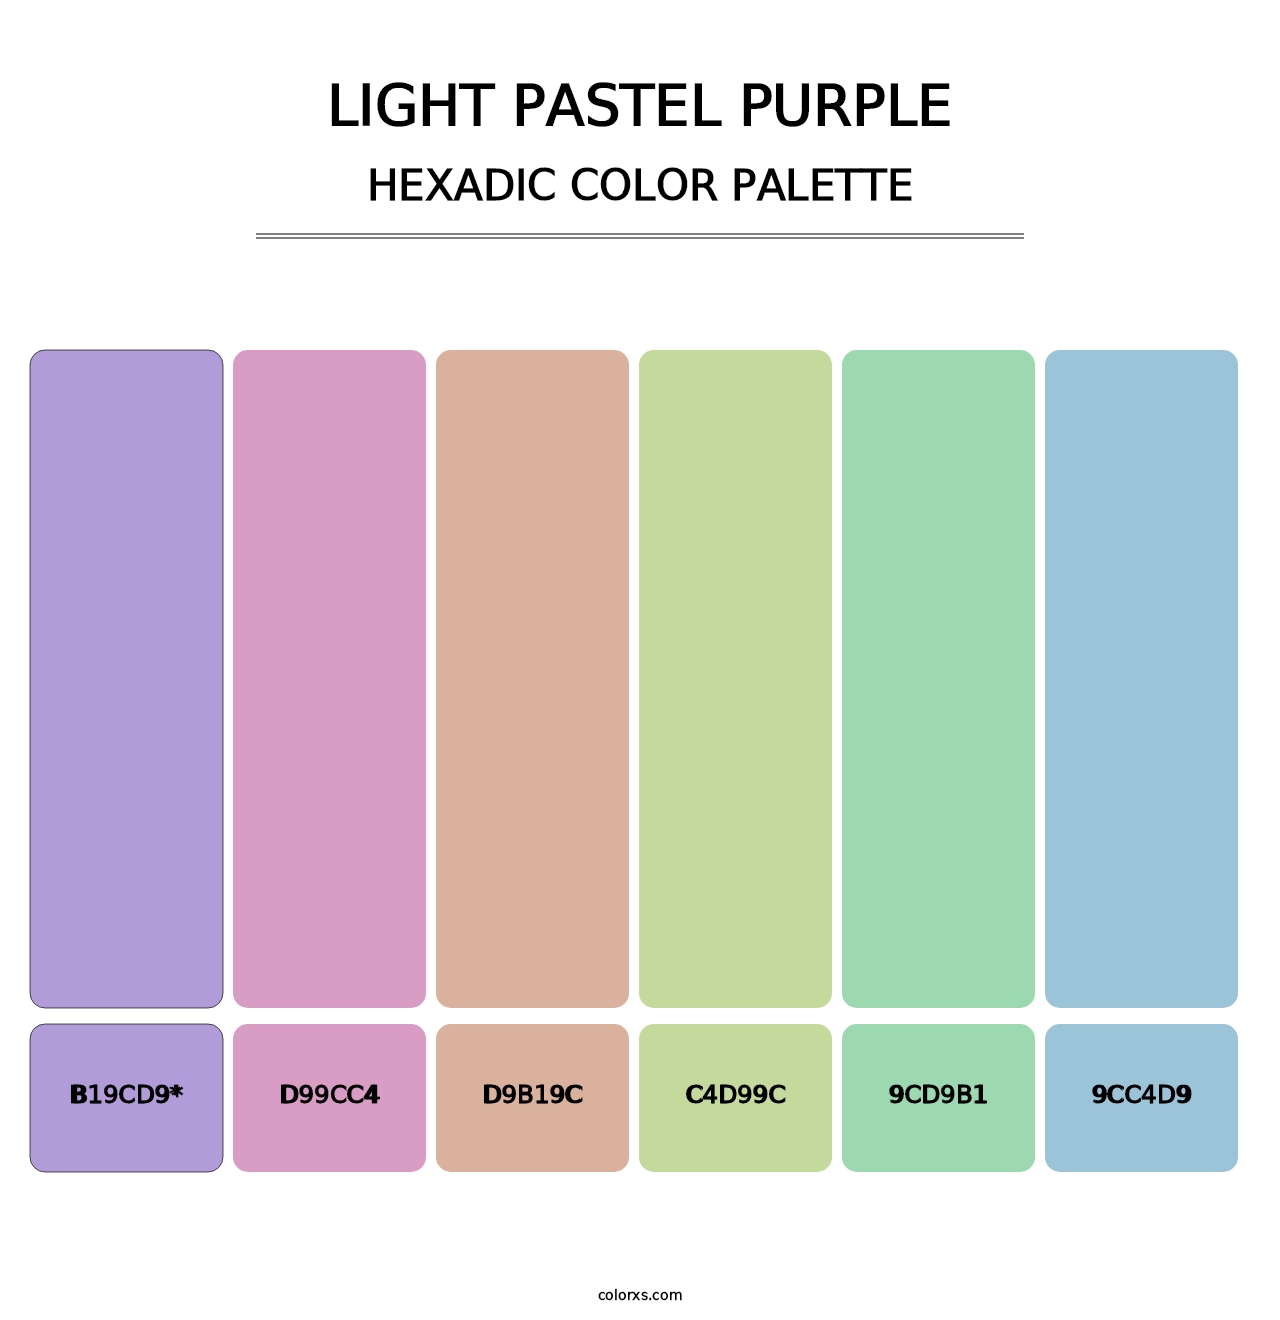 Light Pastel Purple - Hexadic Color Palette